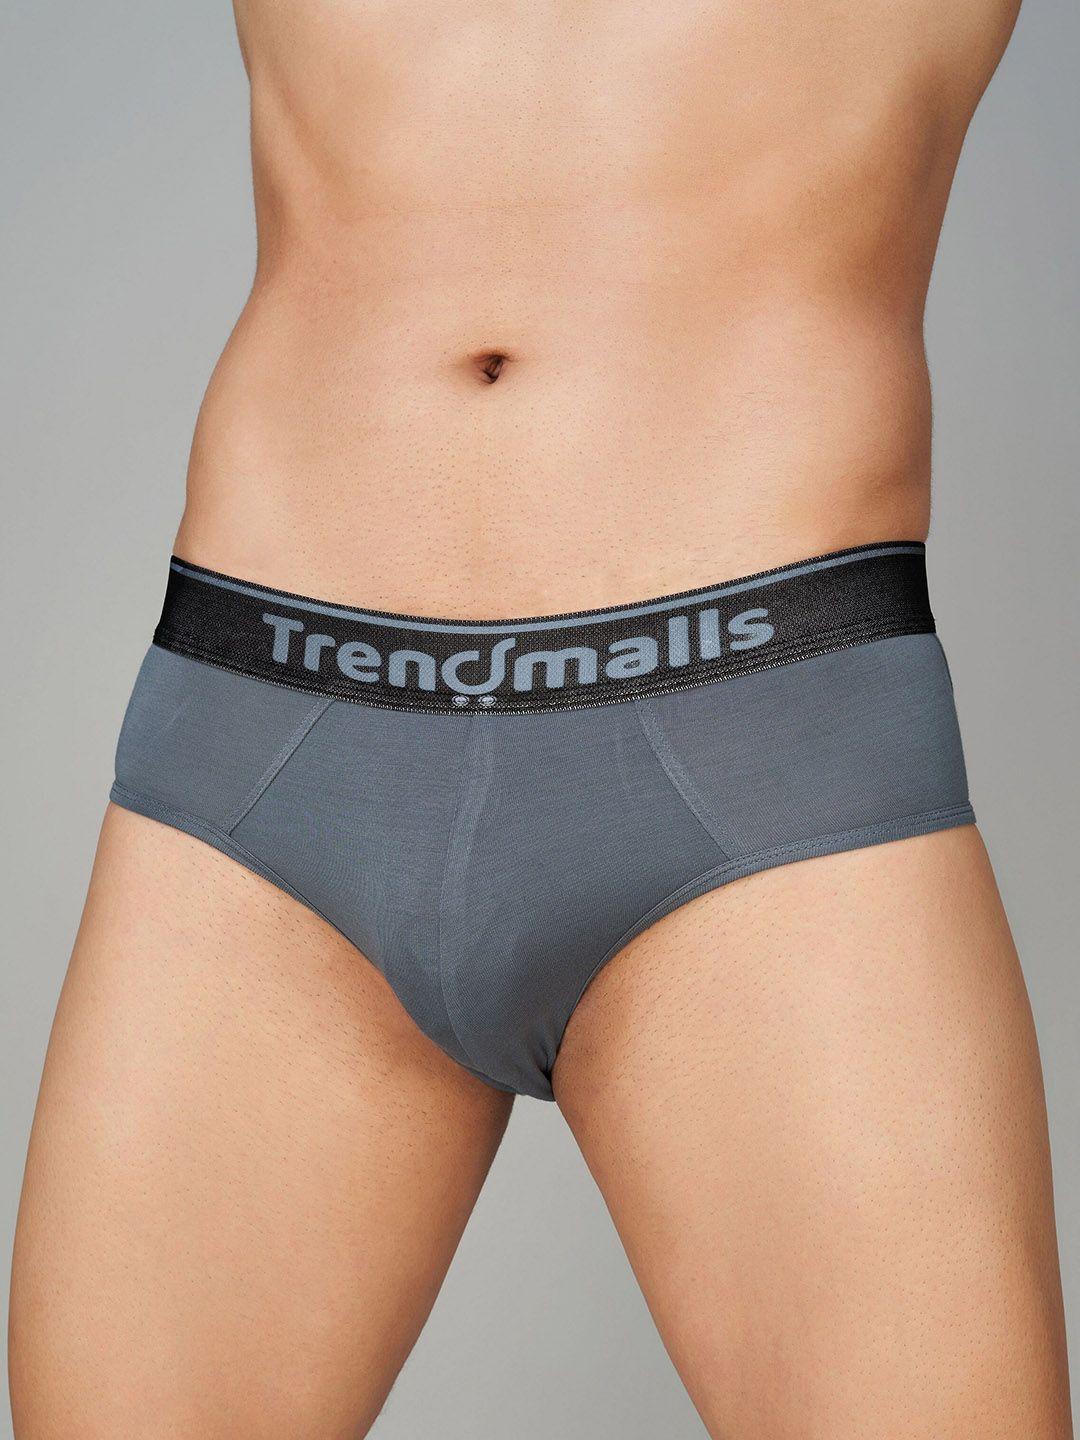 trendmalls brand logo printed high-rise 4-way stretch modal basic brief  tm-mu01-grey-s